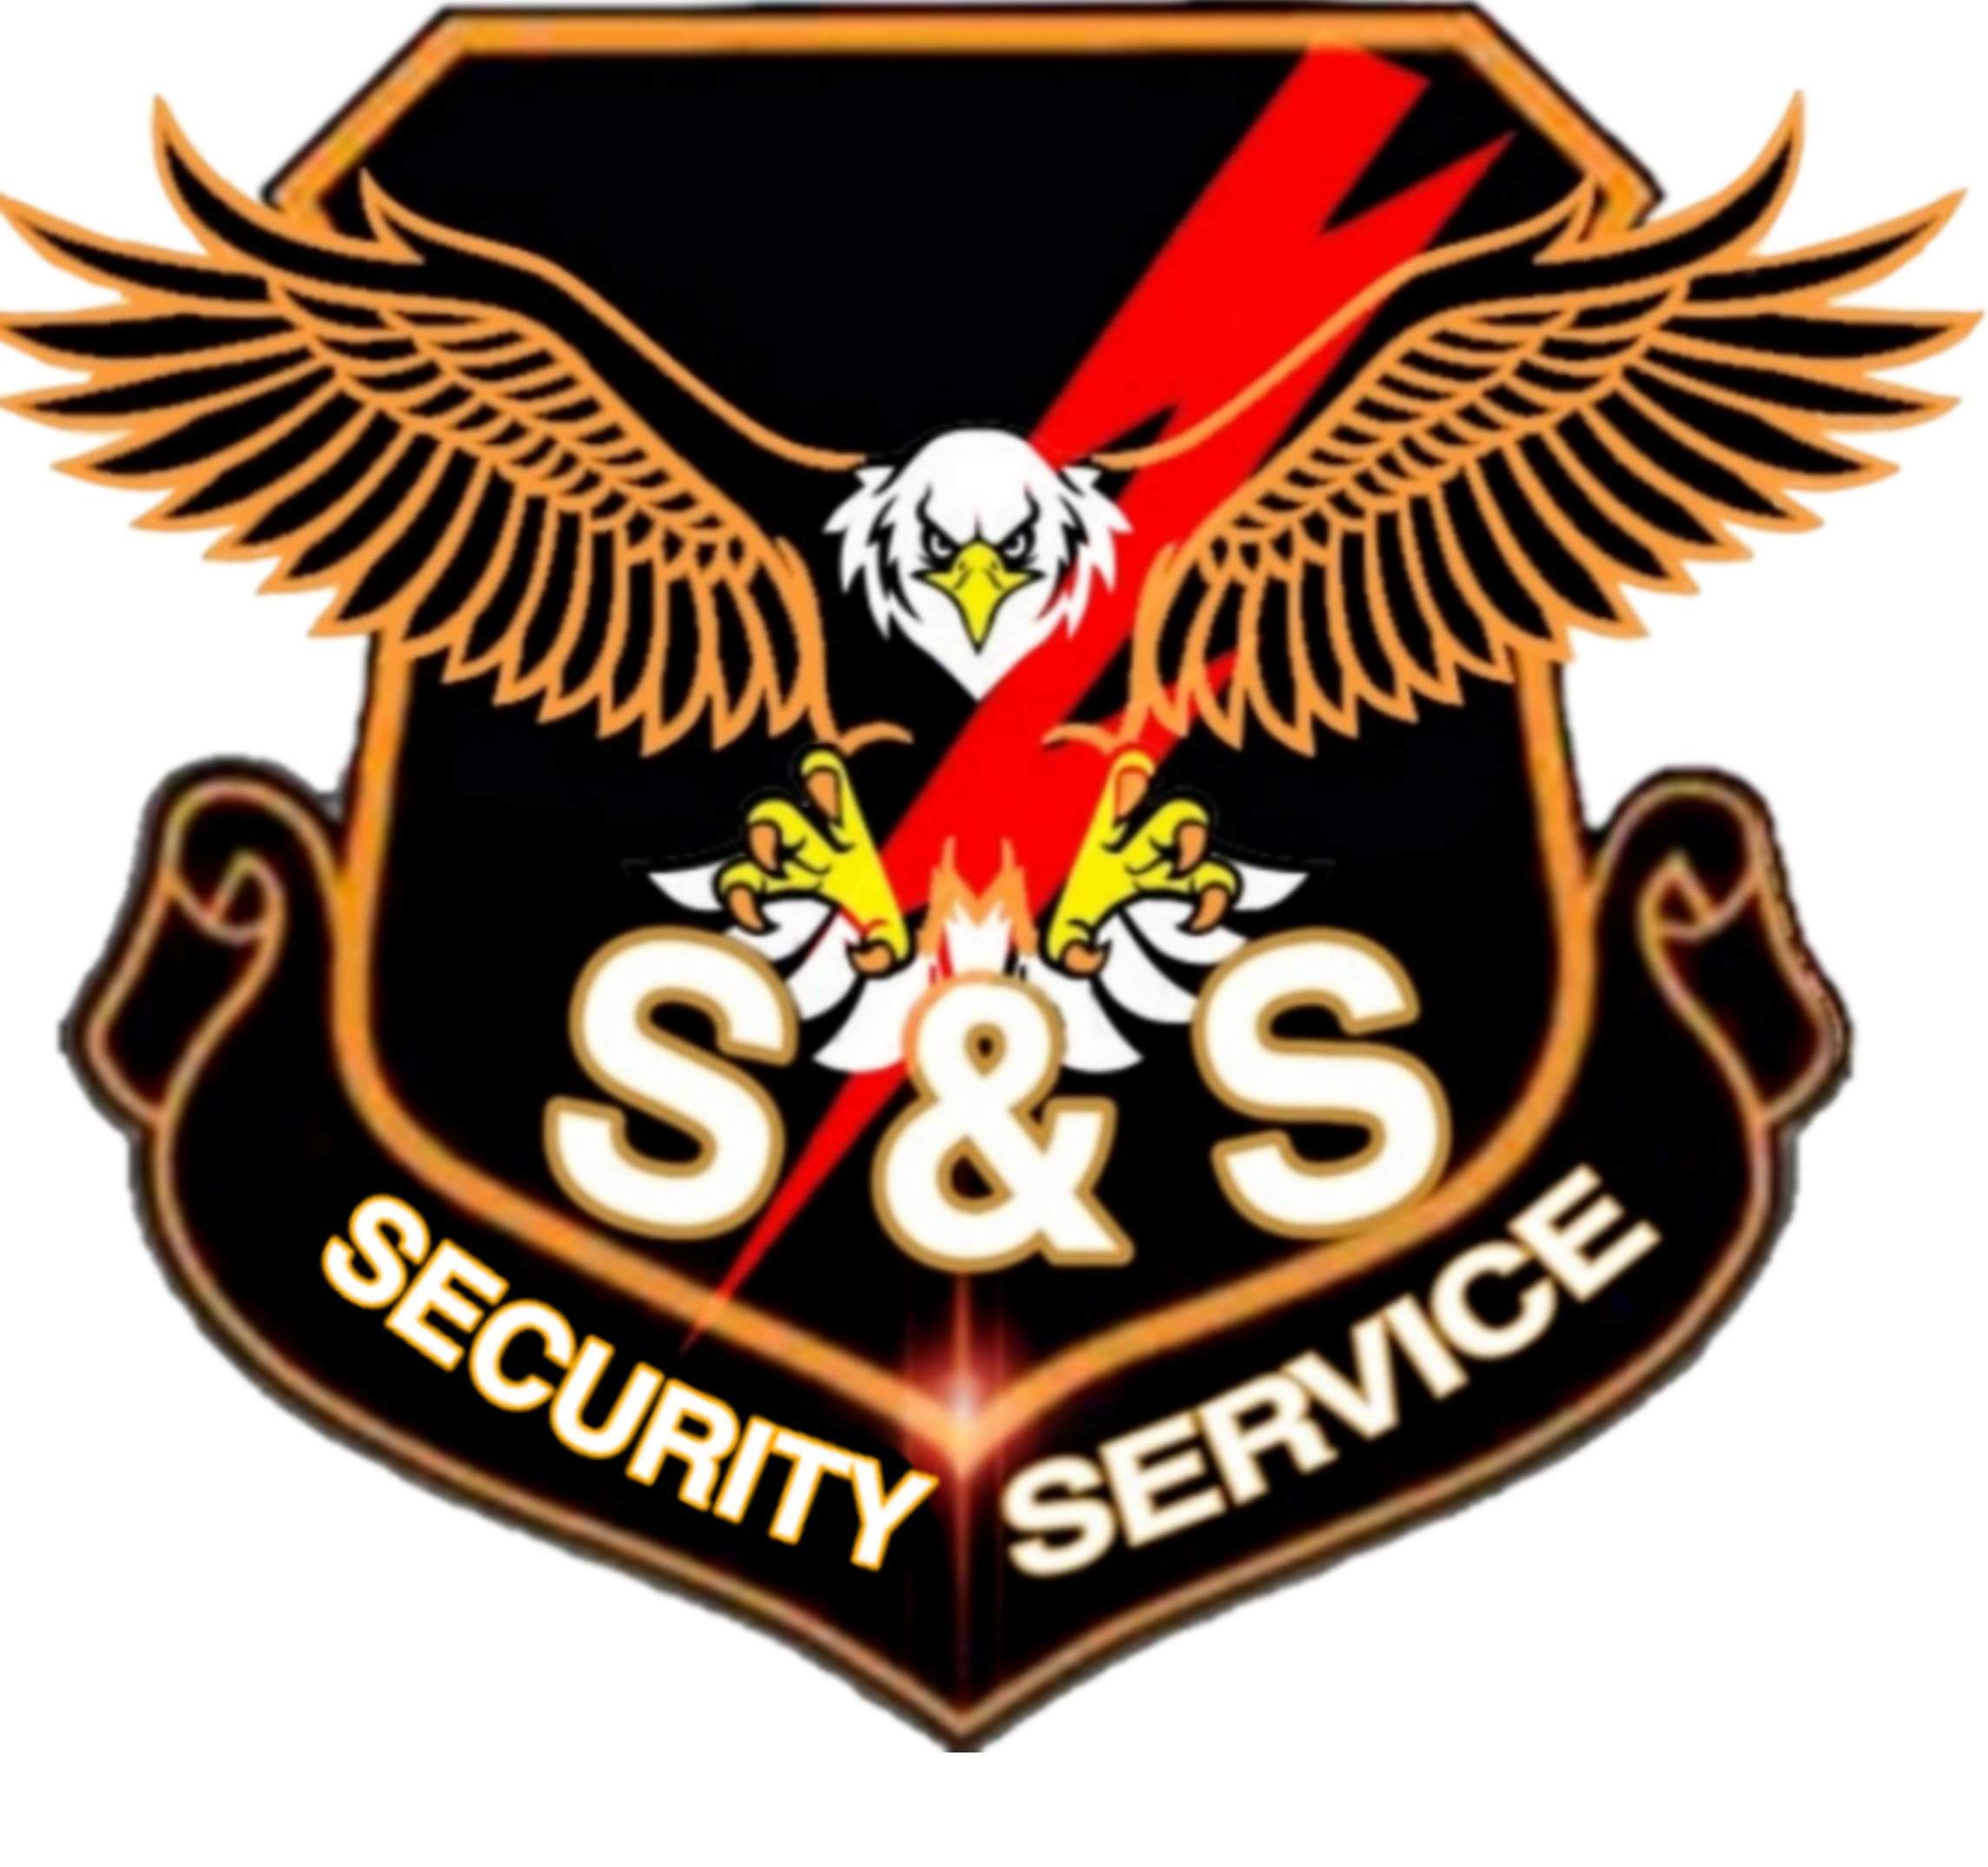 S&S Security Service